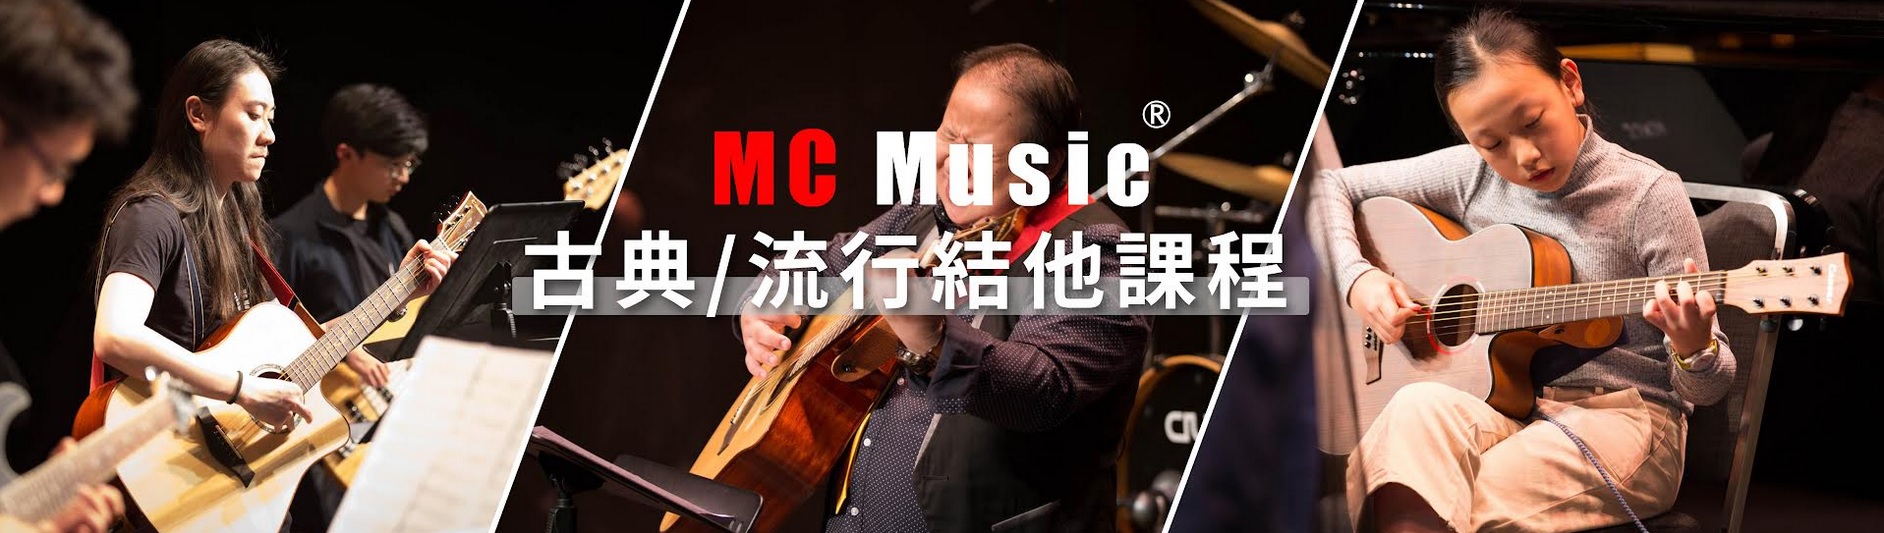 MC Music 美斯音樂- 古典/流行結他課程,結他班, 學結他